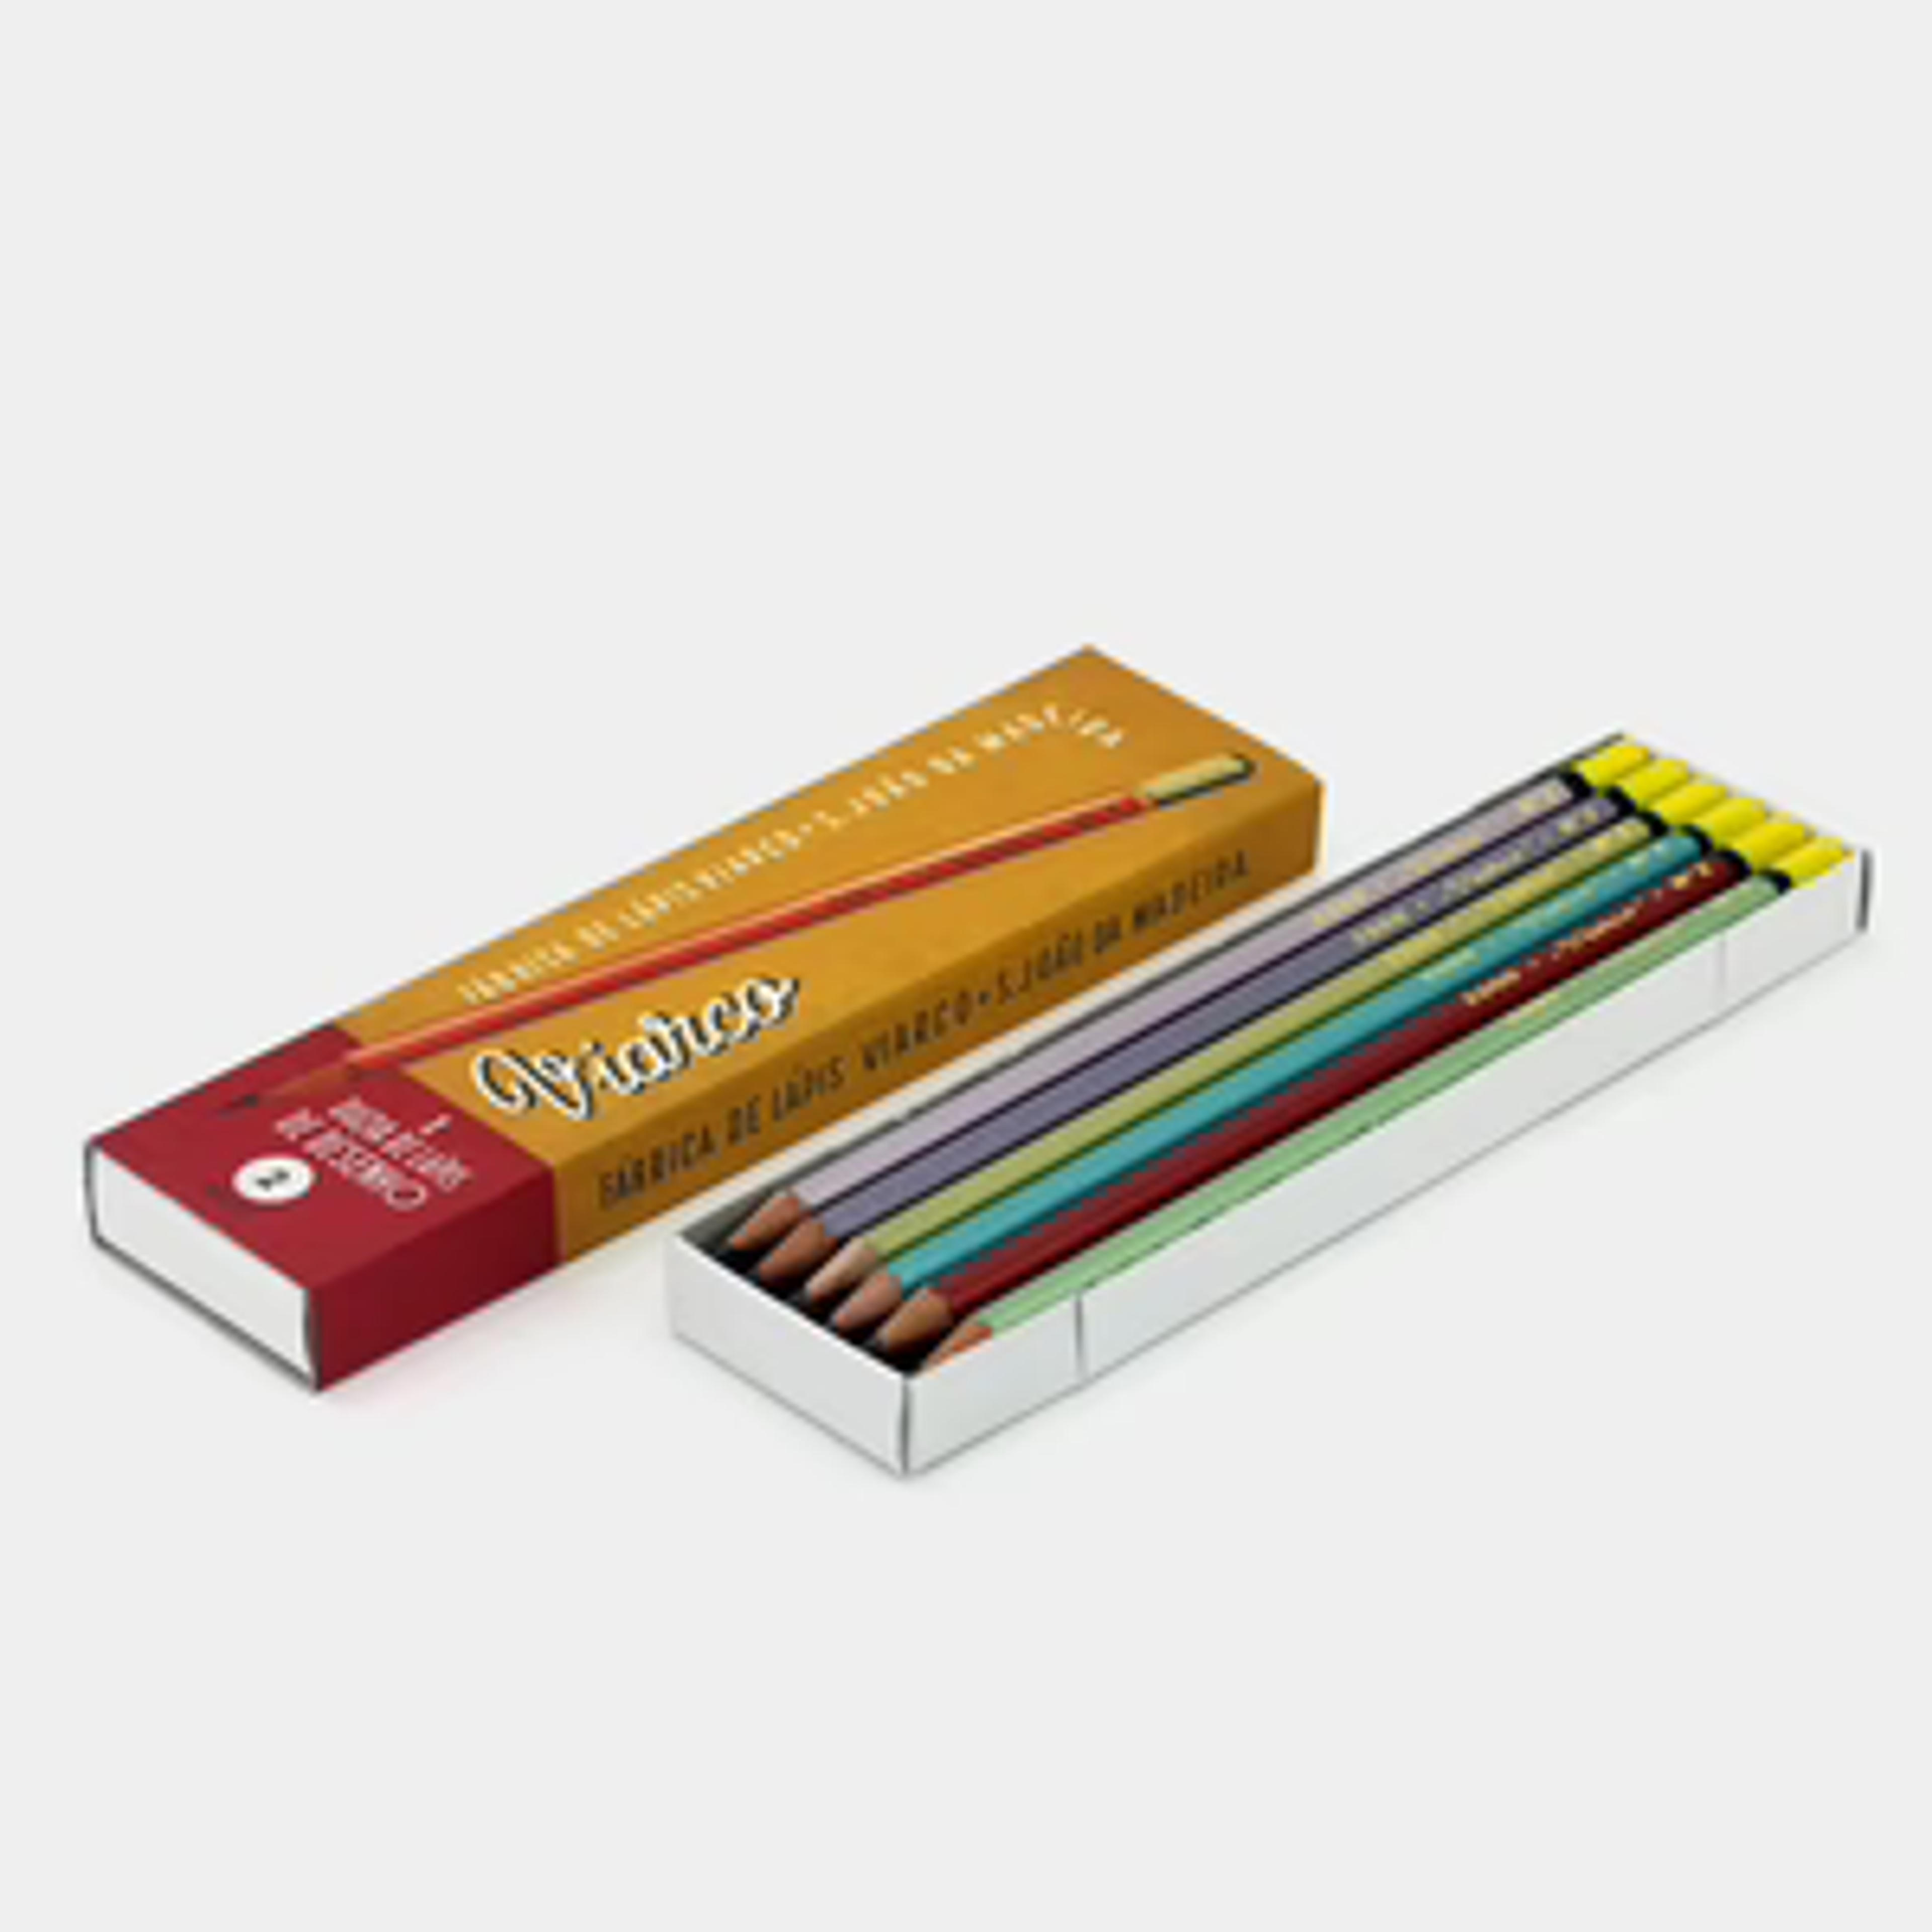 Viarco Vintage Pencils vol.2000 (box of 12) – The Journal Shop